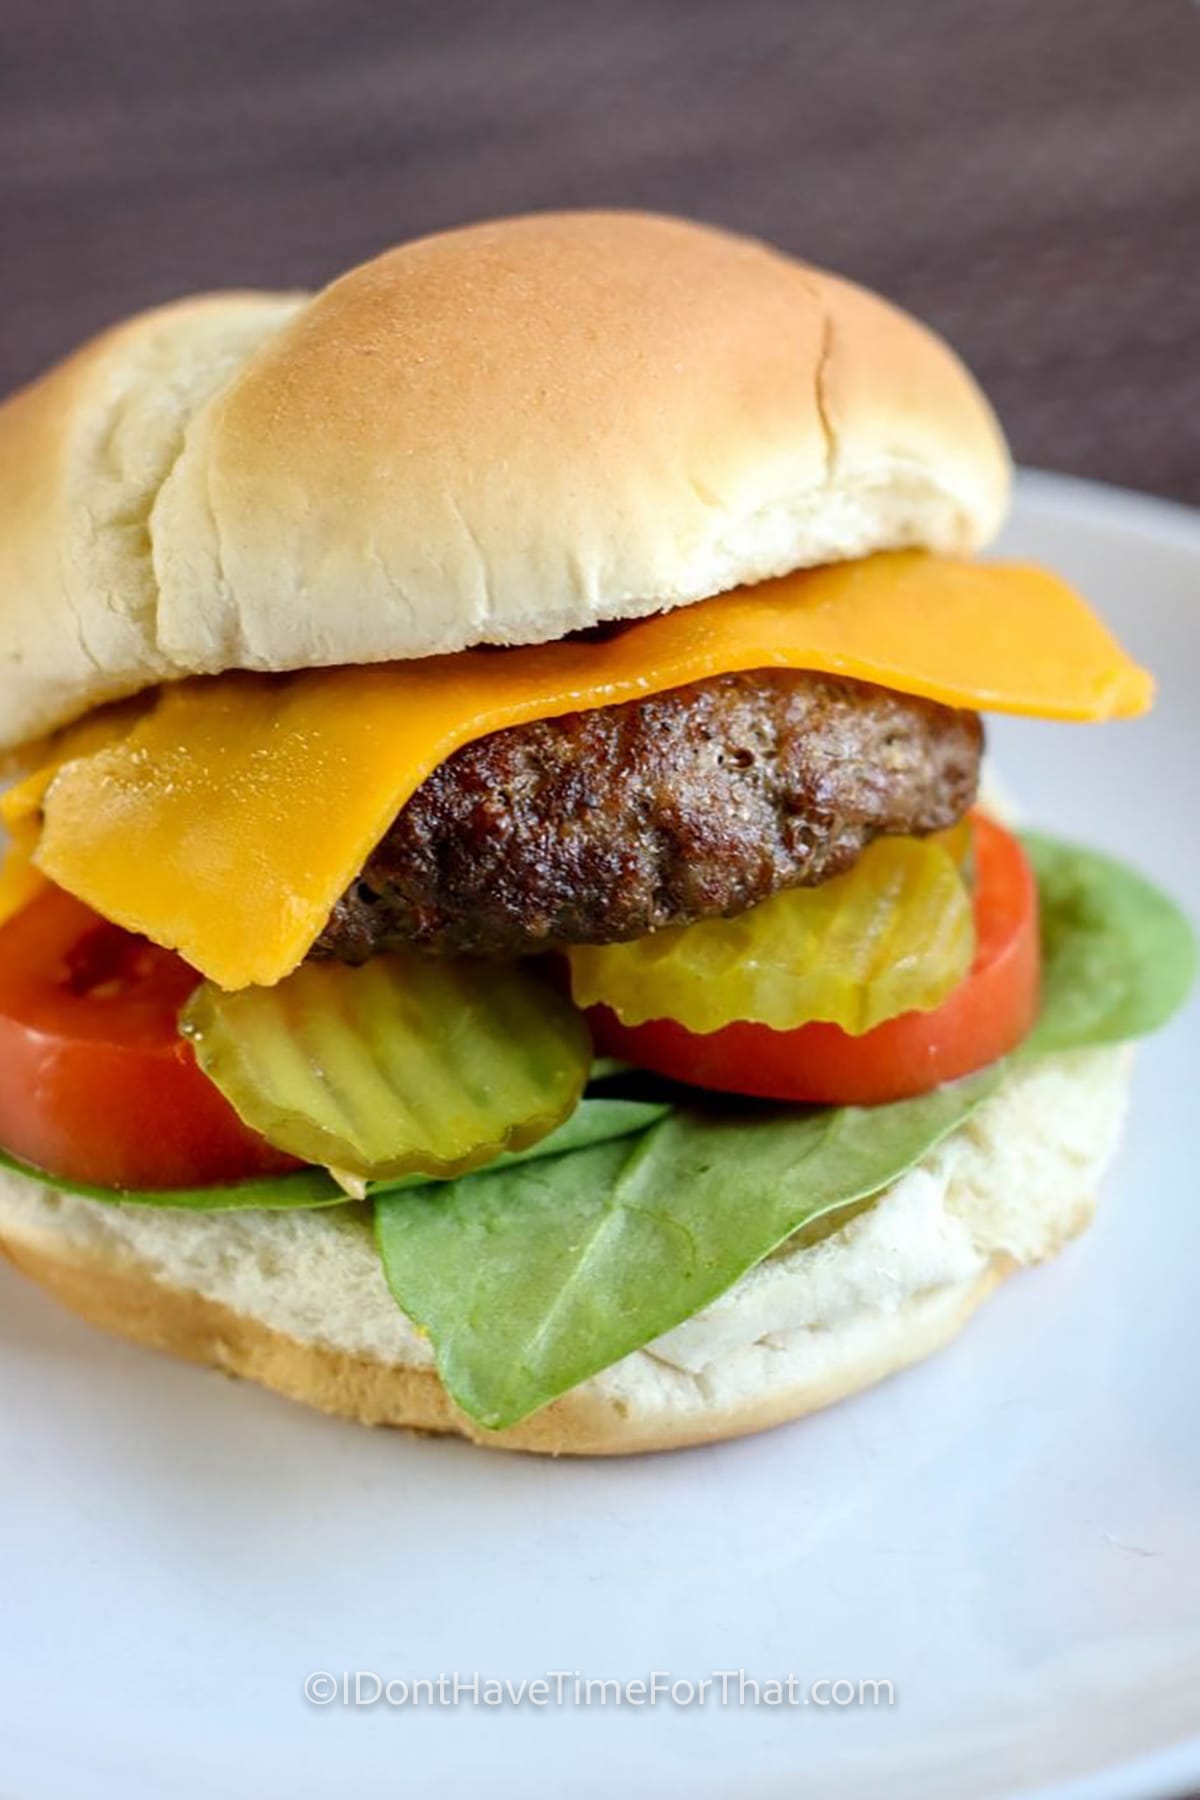 hamburger with bun and toppings